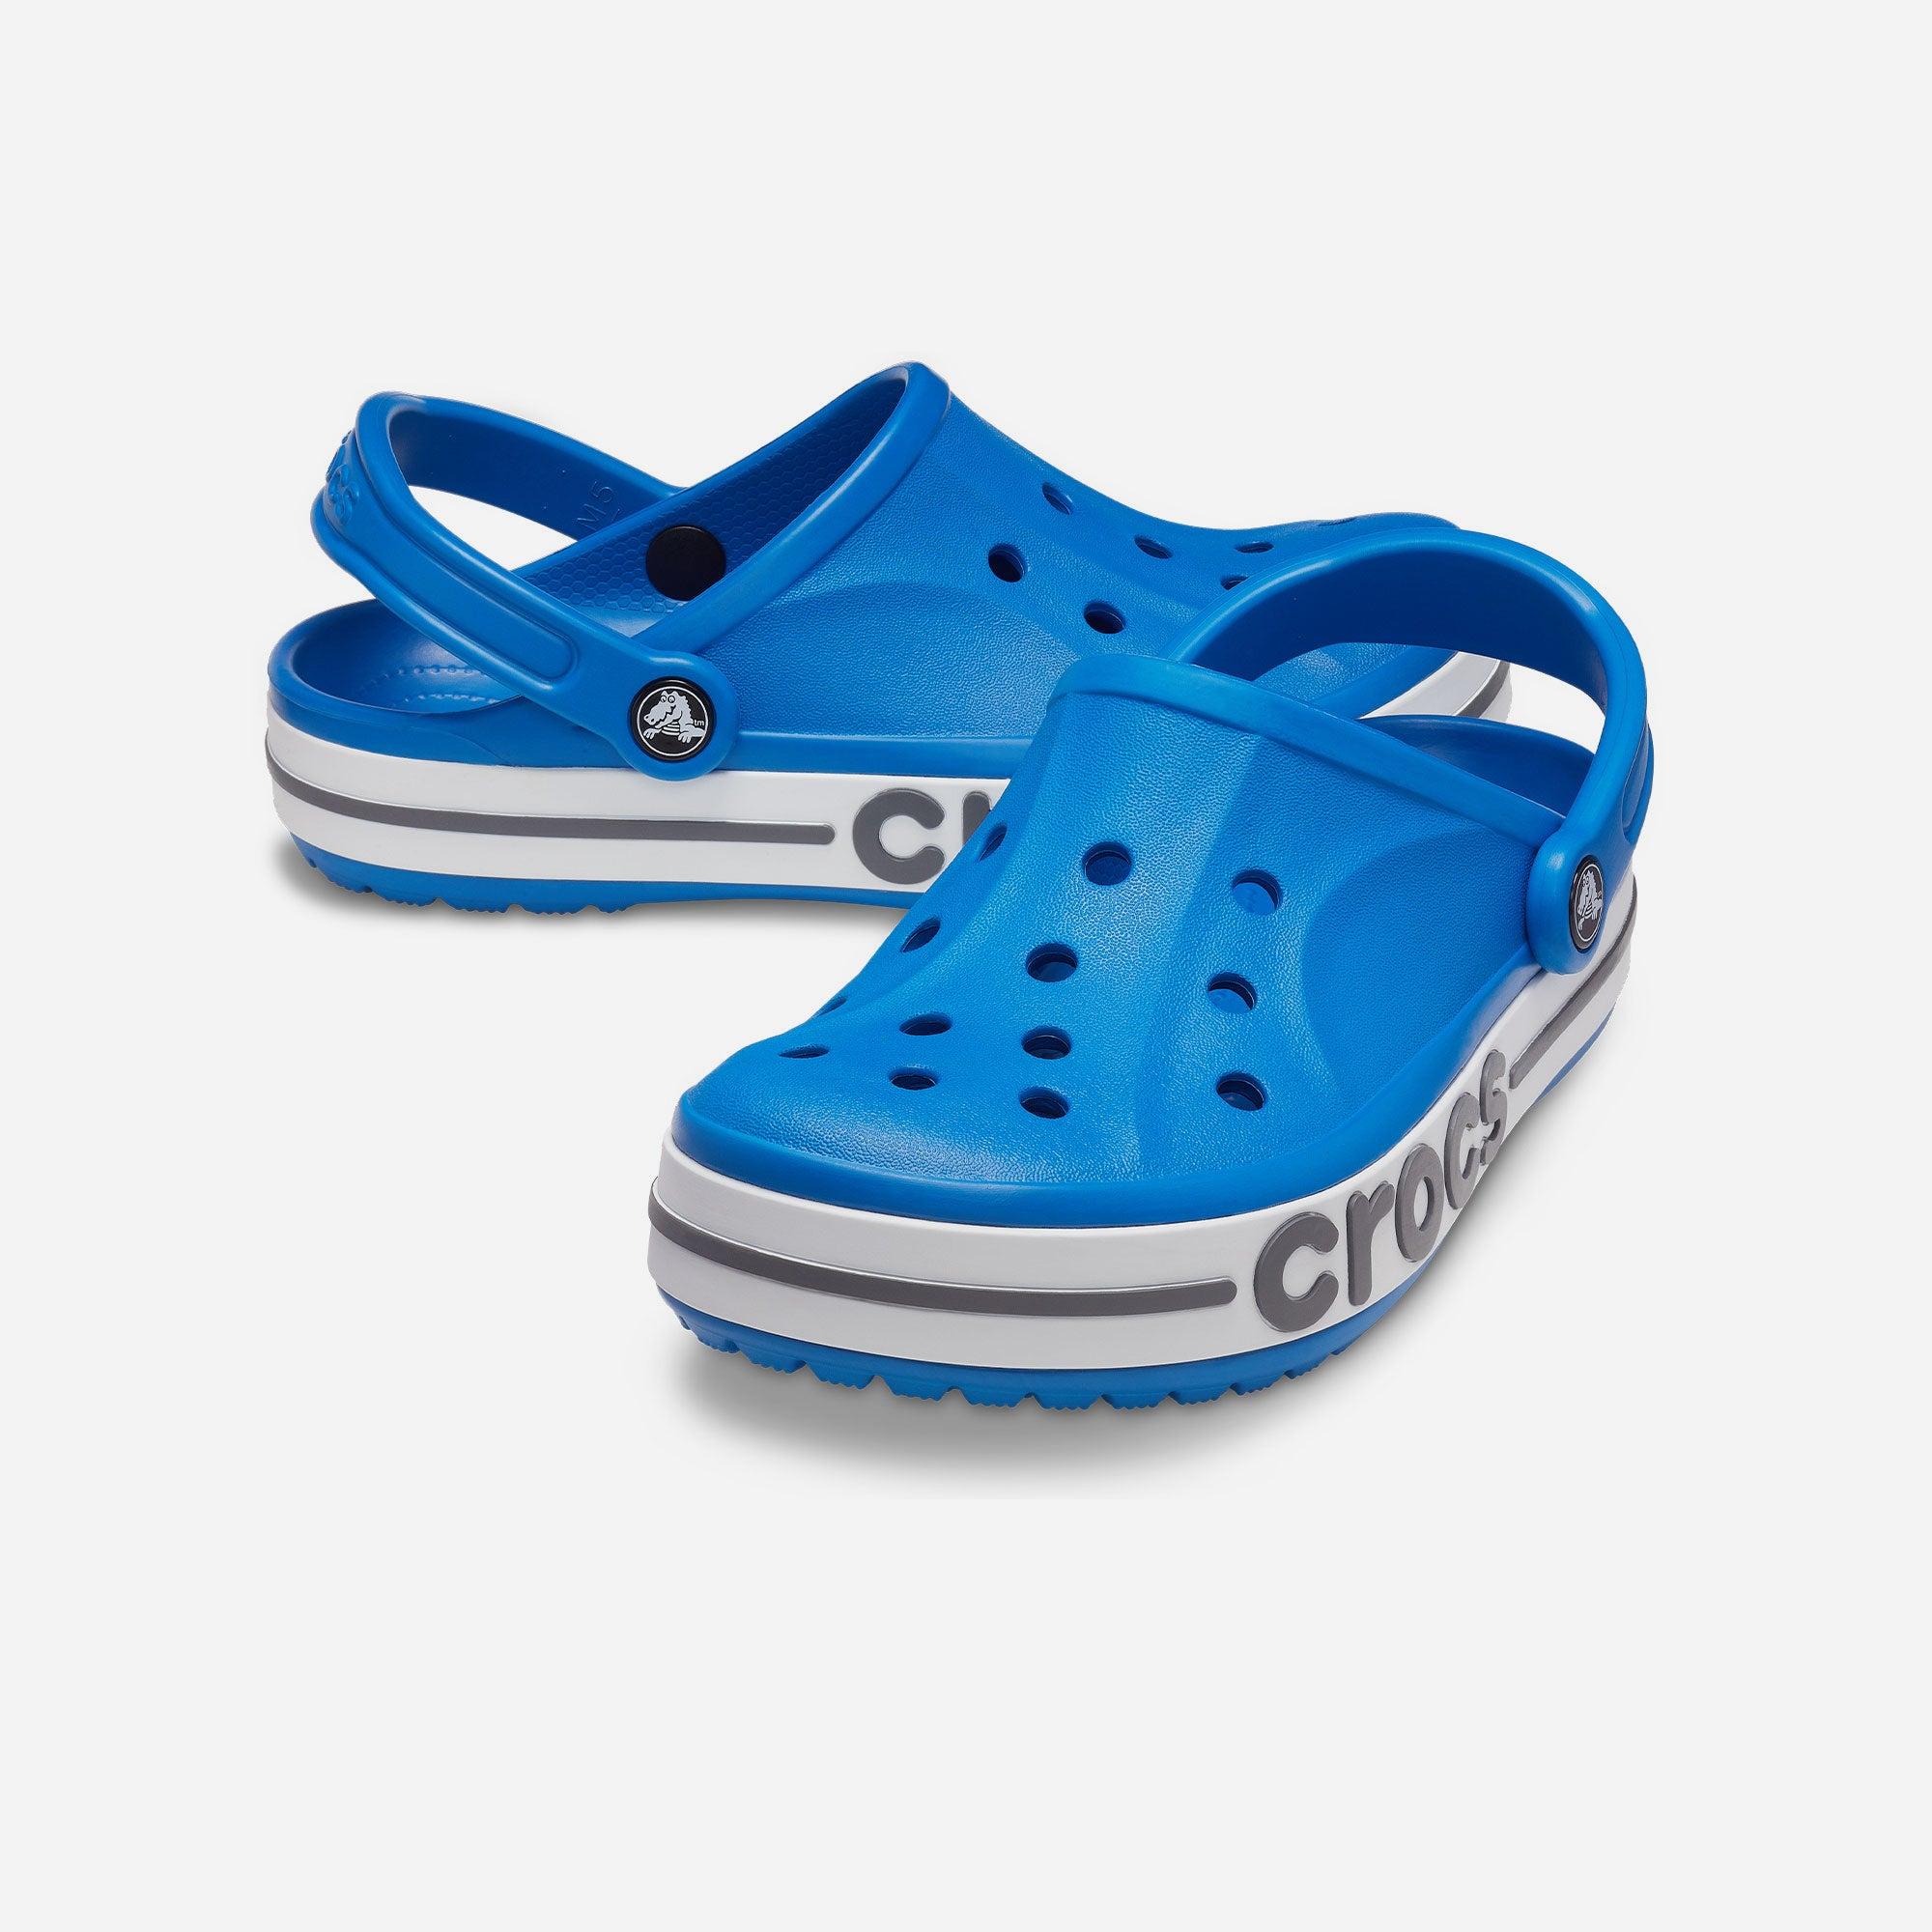 Giày nhựa thời trang unisex Crocs Bayaband - 205089-4JO